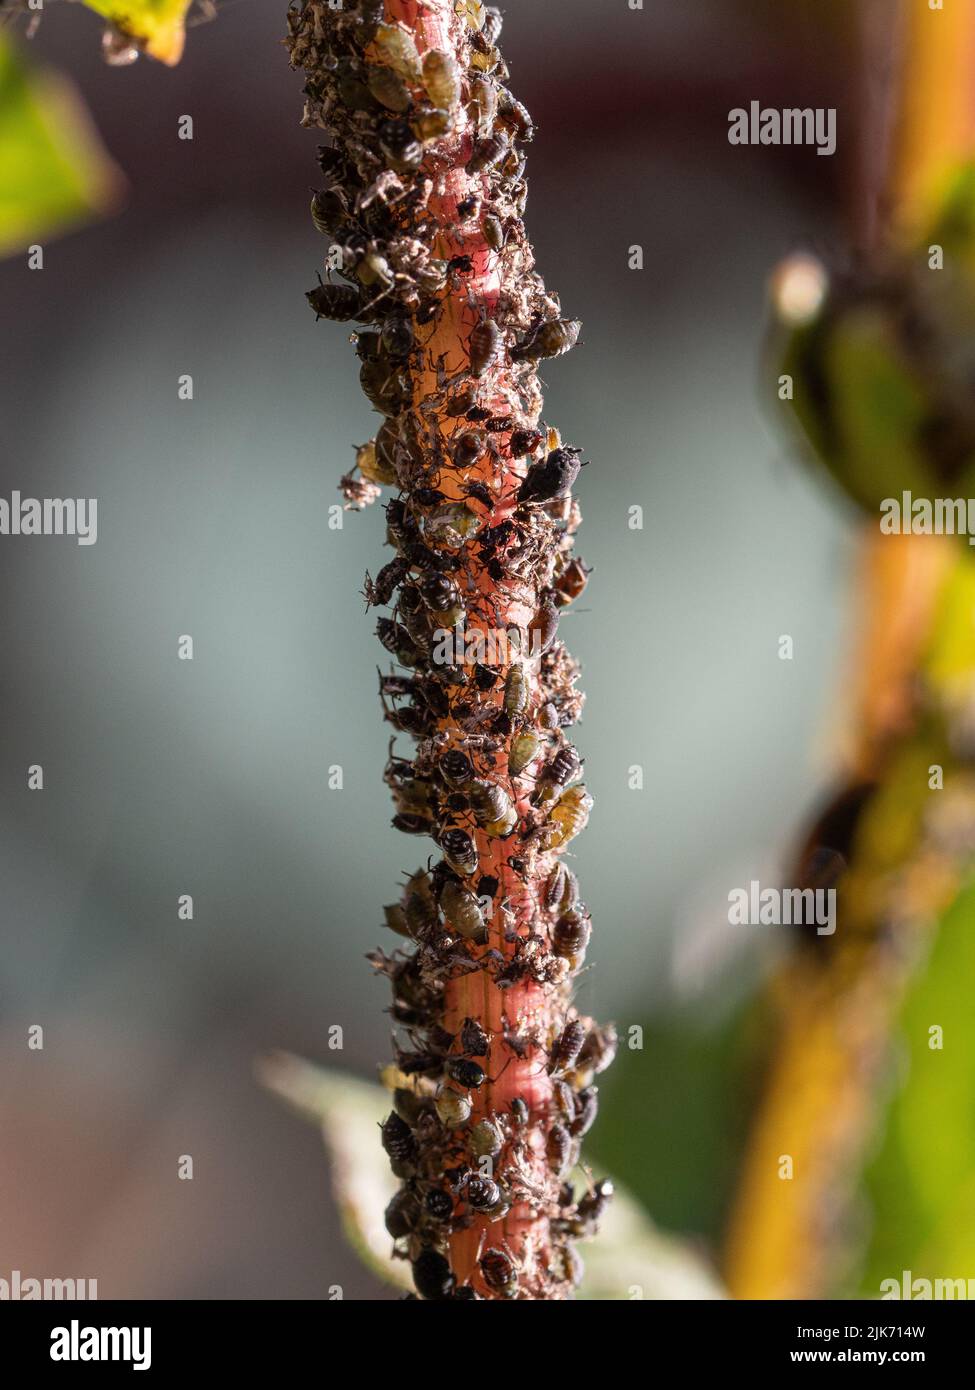 A close up of black aphids infesting a Dahlia stem Stock Photo